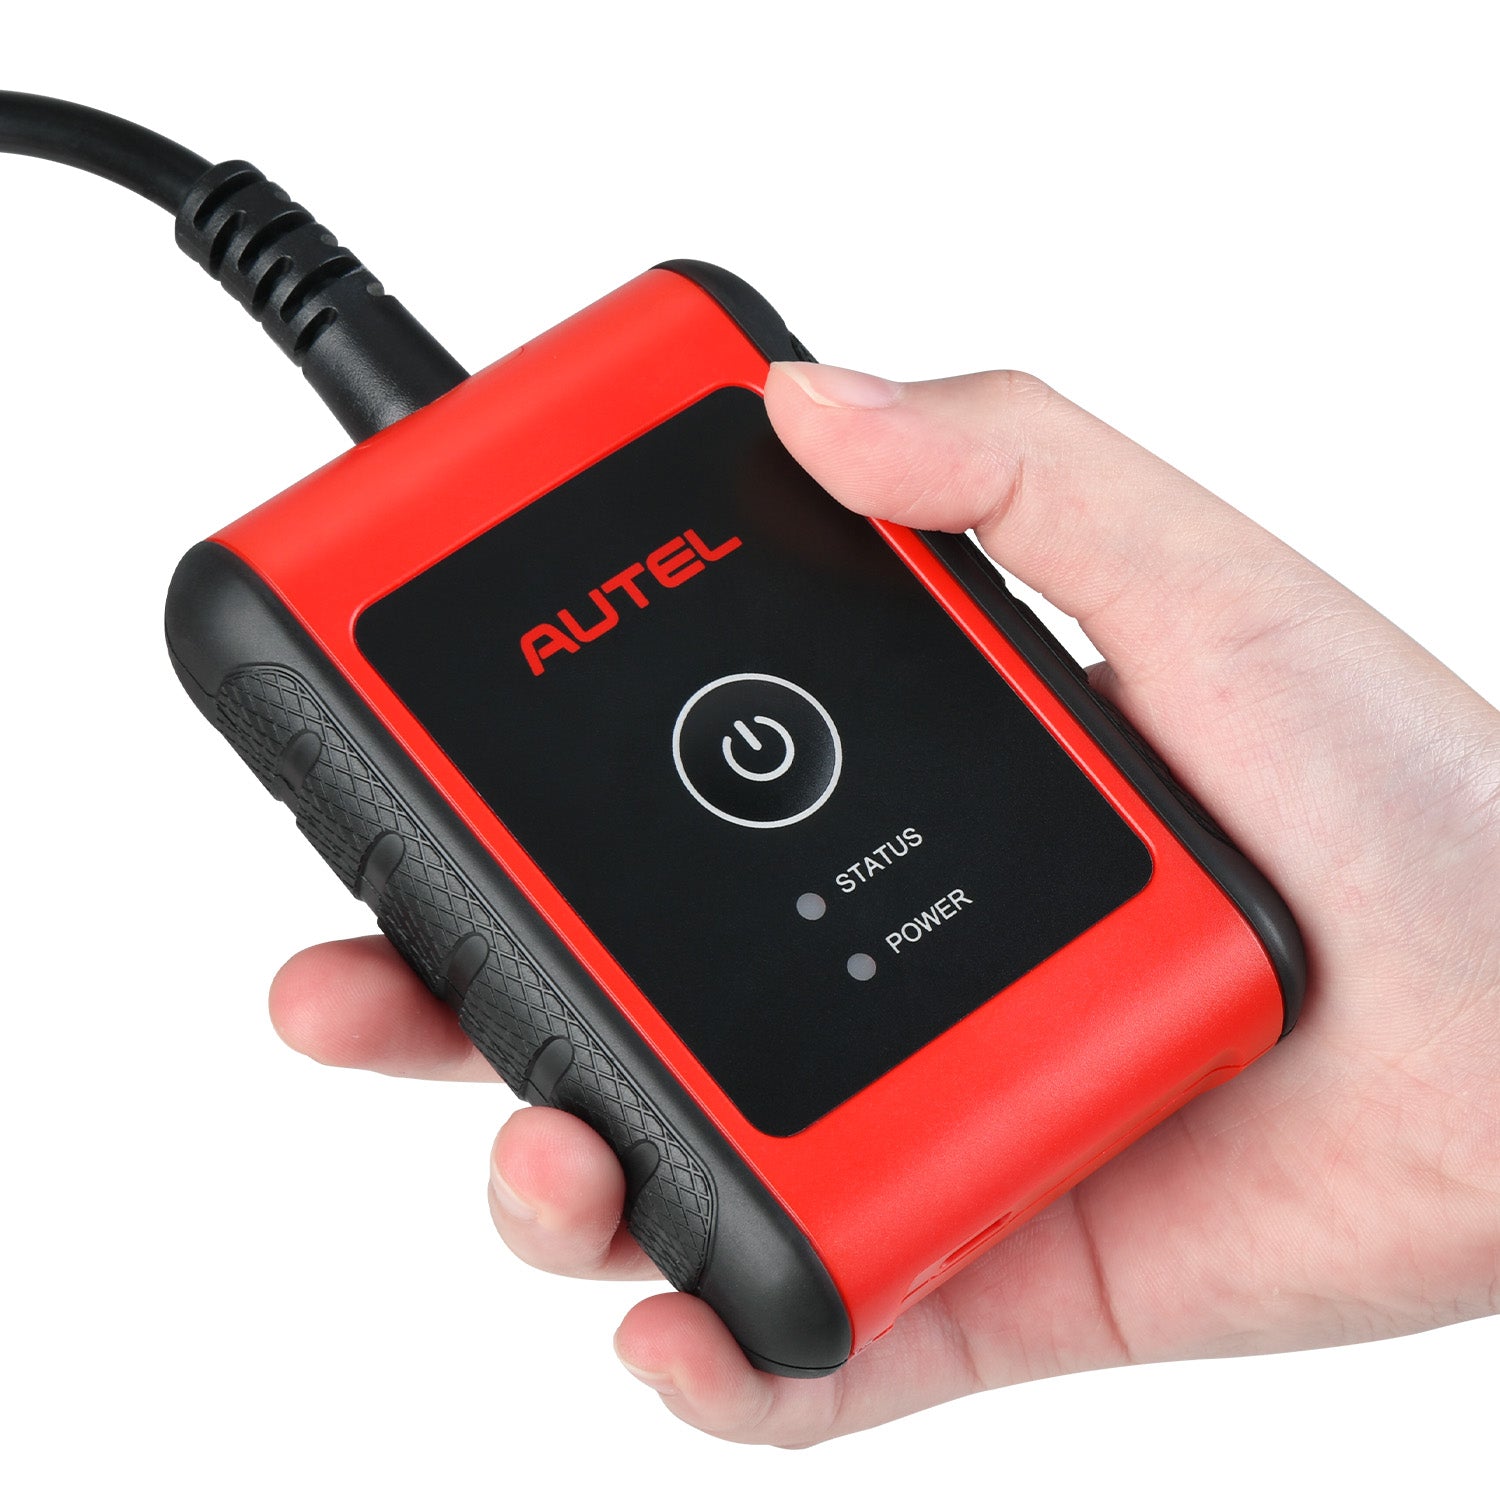 Buy: Autel MaxiBAS BT506 Car Battery Tester – Autel.com